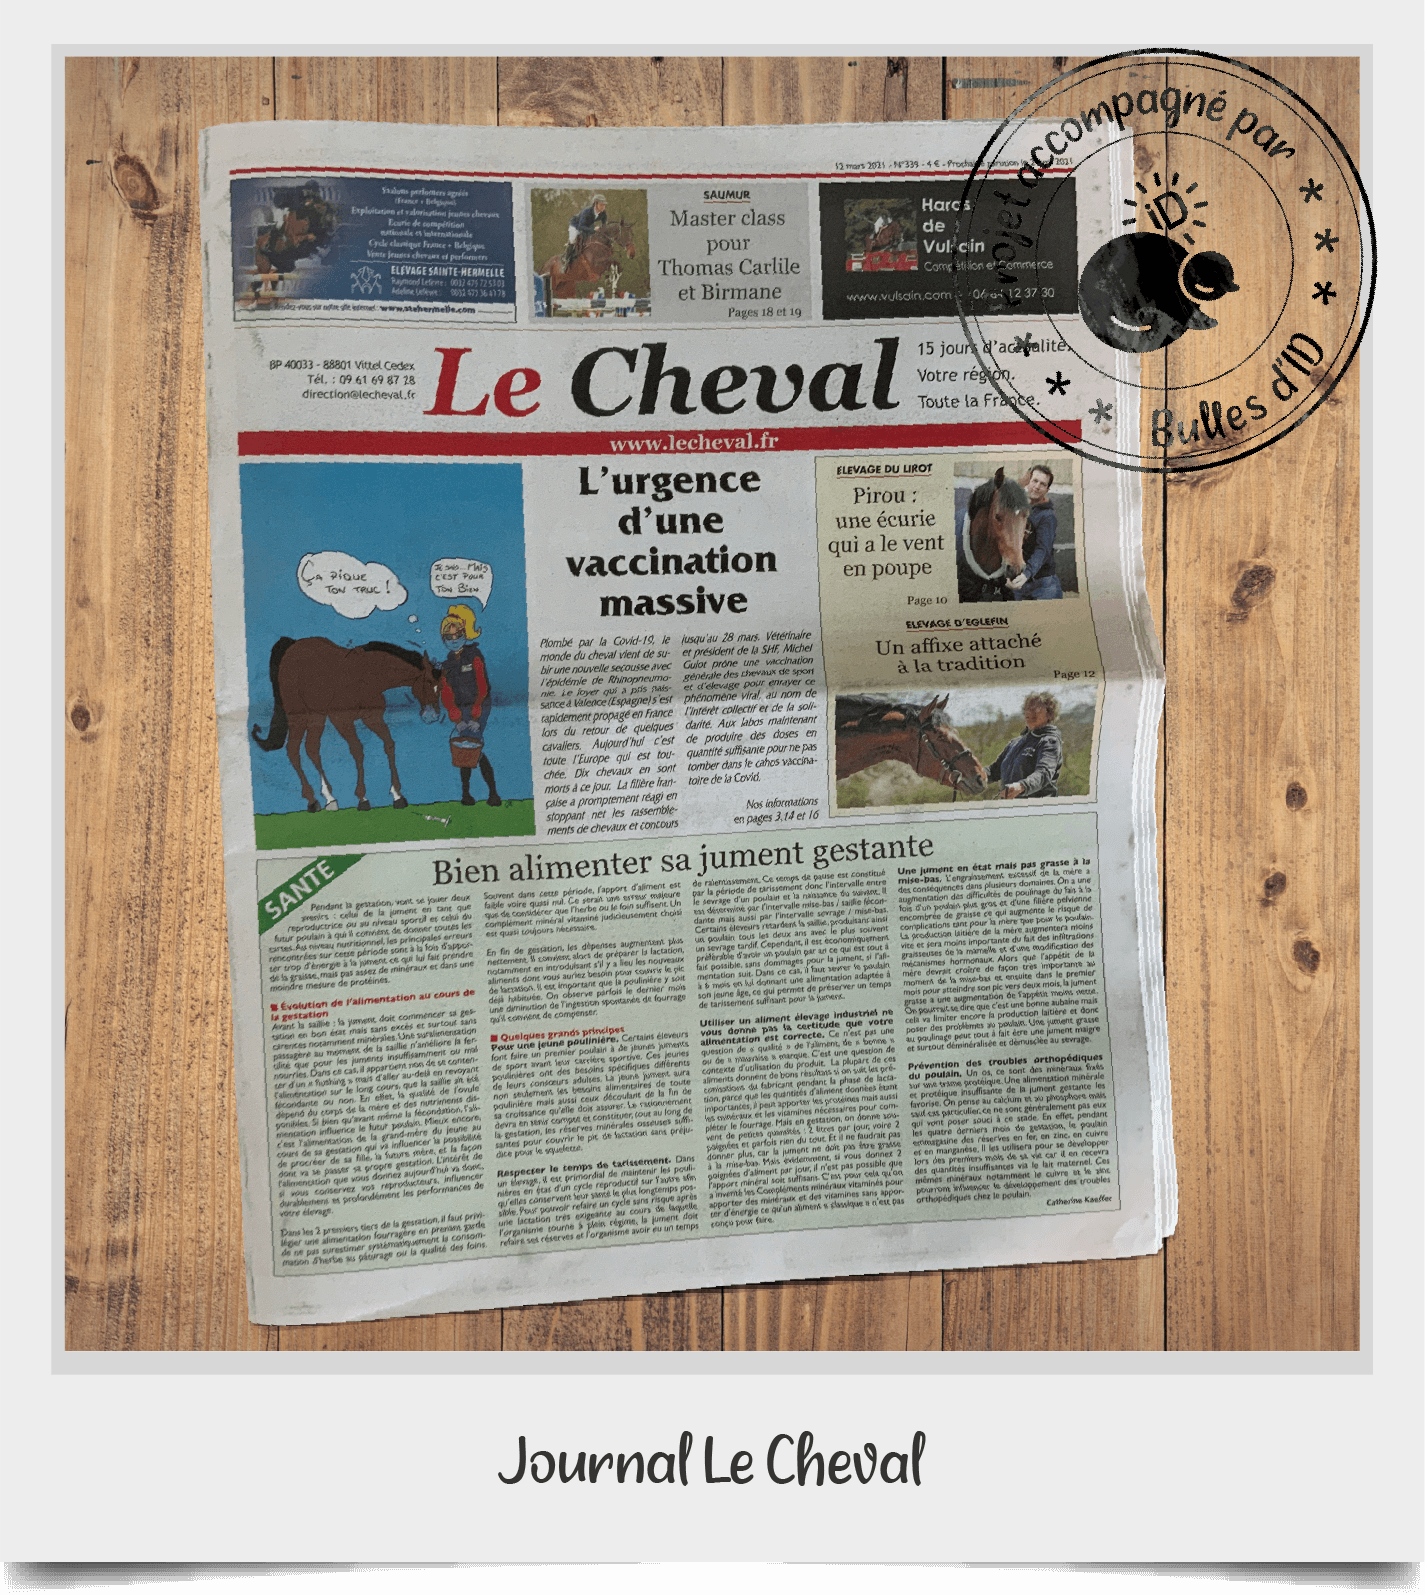 Polaroid illustration Journal Le Cheval vaccination HVE1